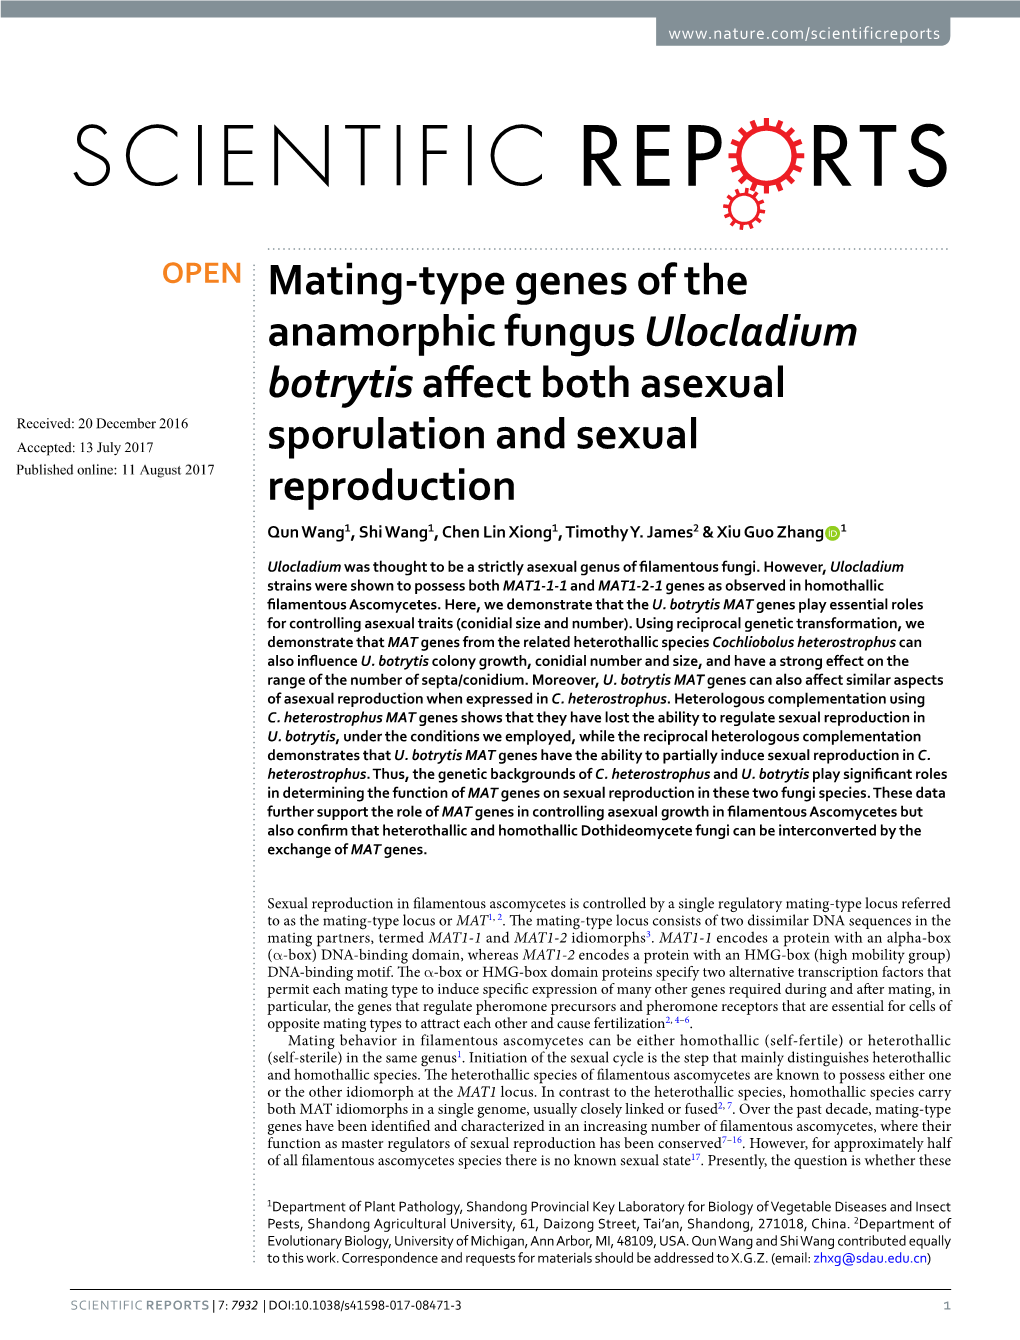 Mating-Type Genes of the Anamorphic Fungus Ulocladium Botrytis Affect